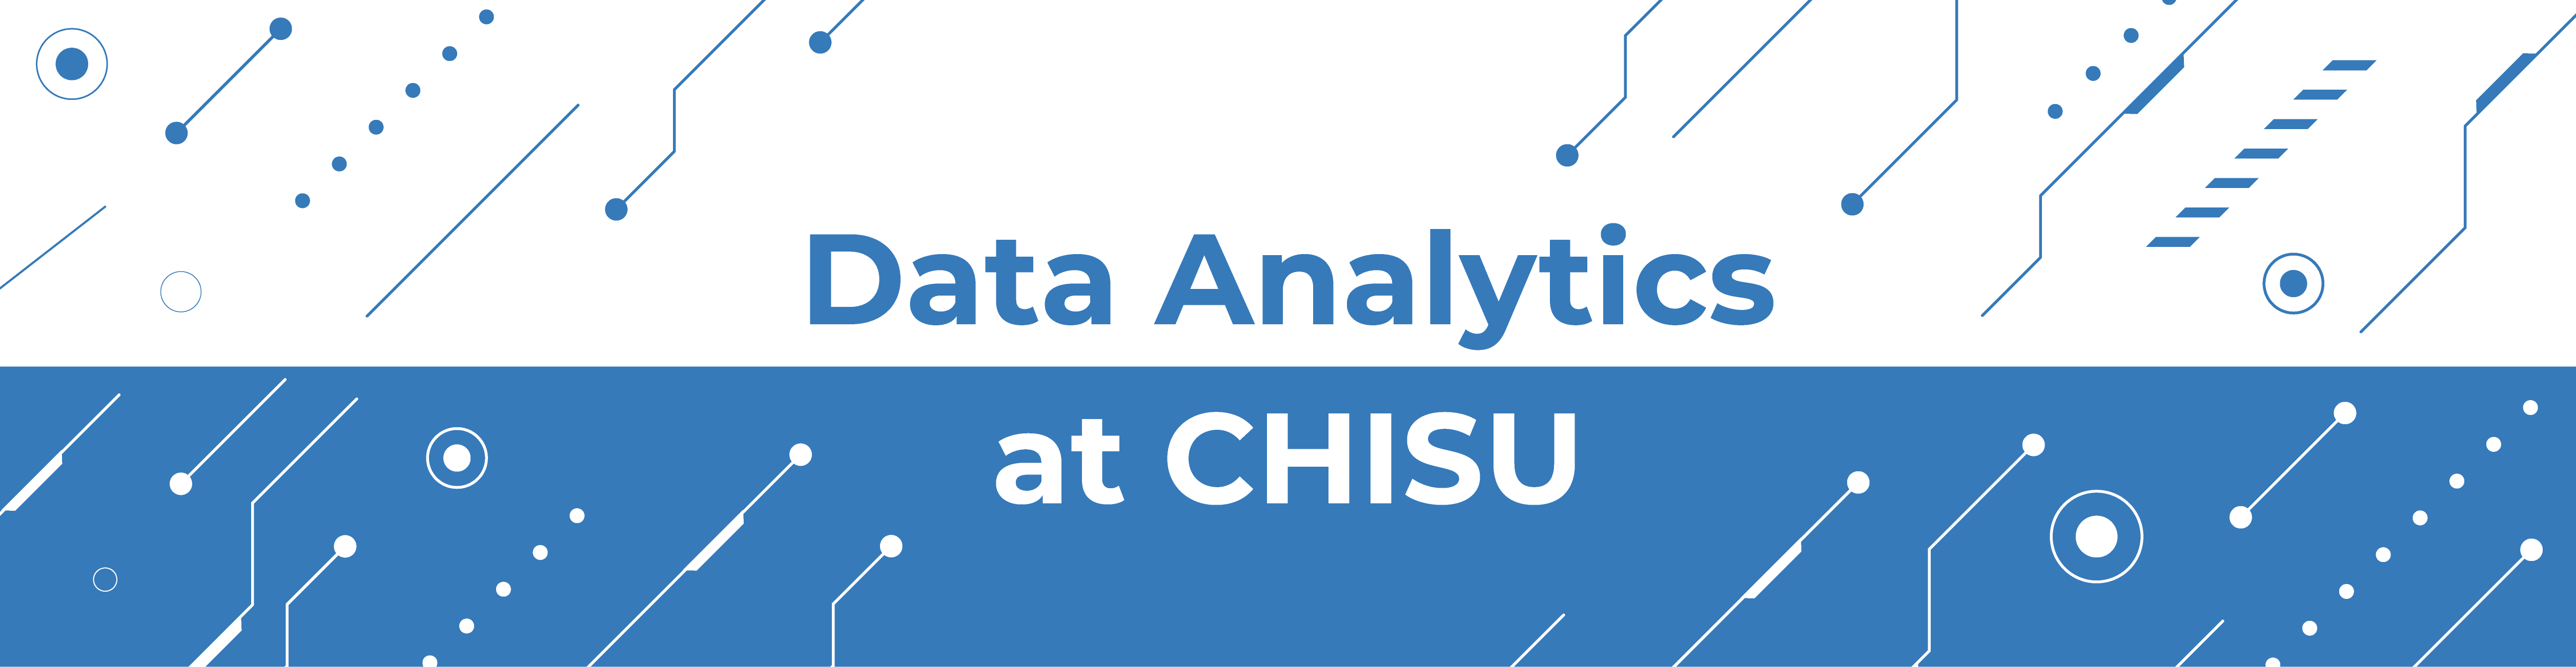 Banner that reads "Data Analytics at CHISU"